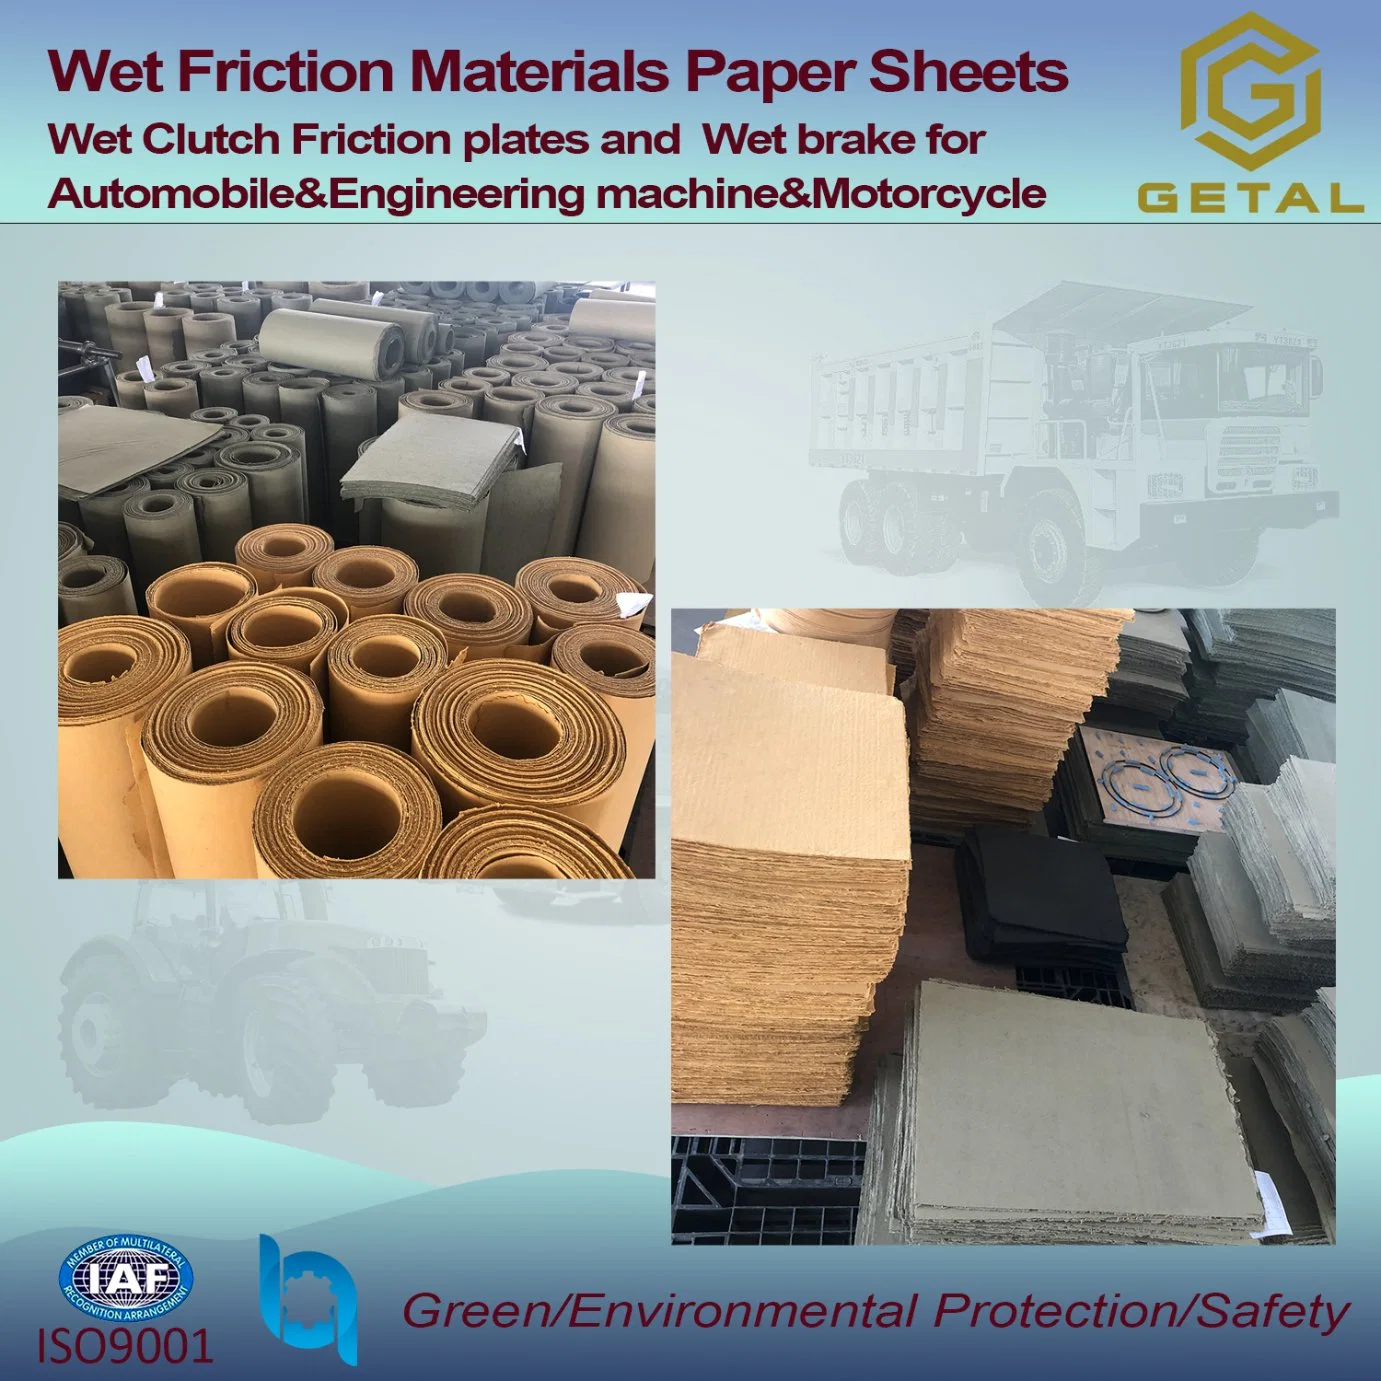 Carbon Fibers Black DC0017 Wet Friction Materials Paper Sheets